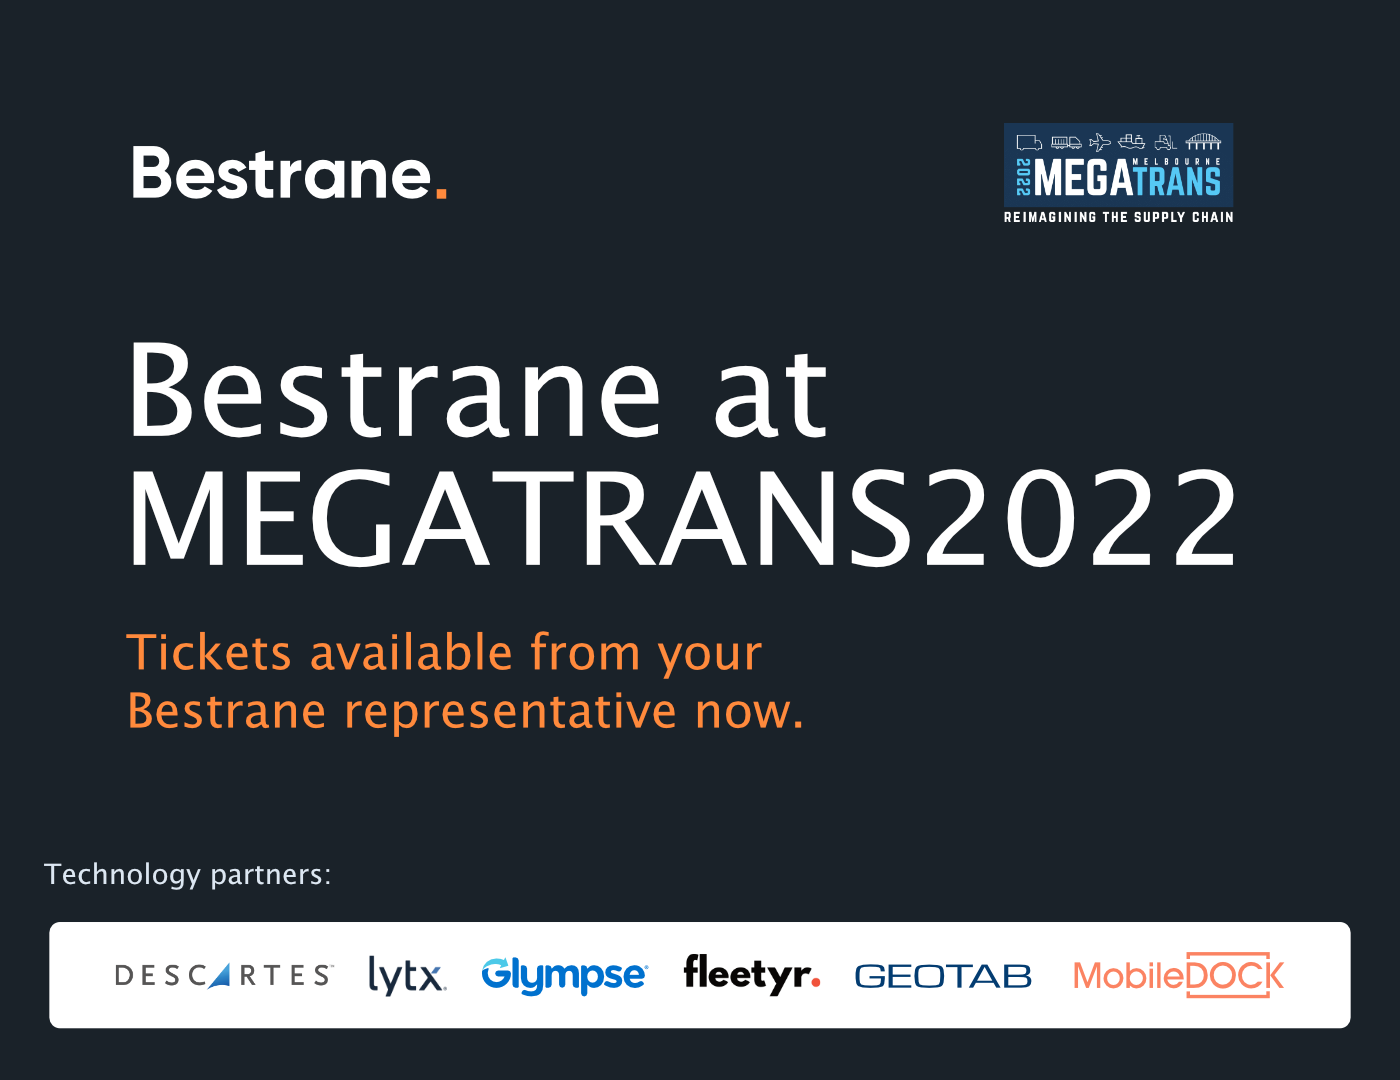 Bestrane at MEGATRANS 2022